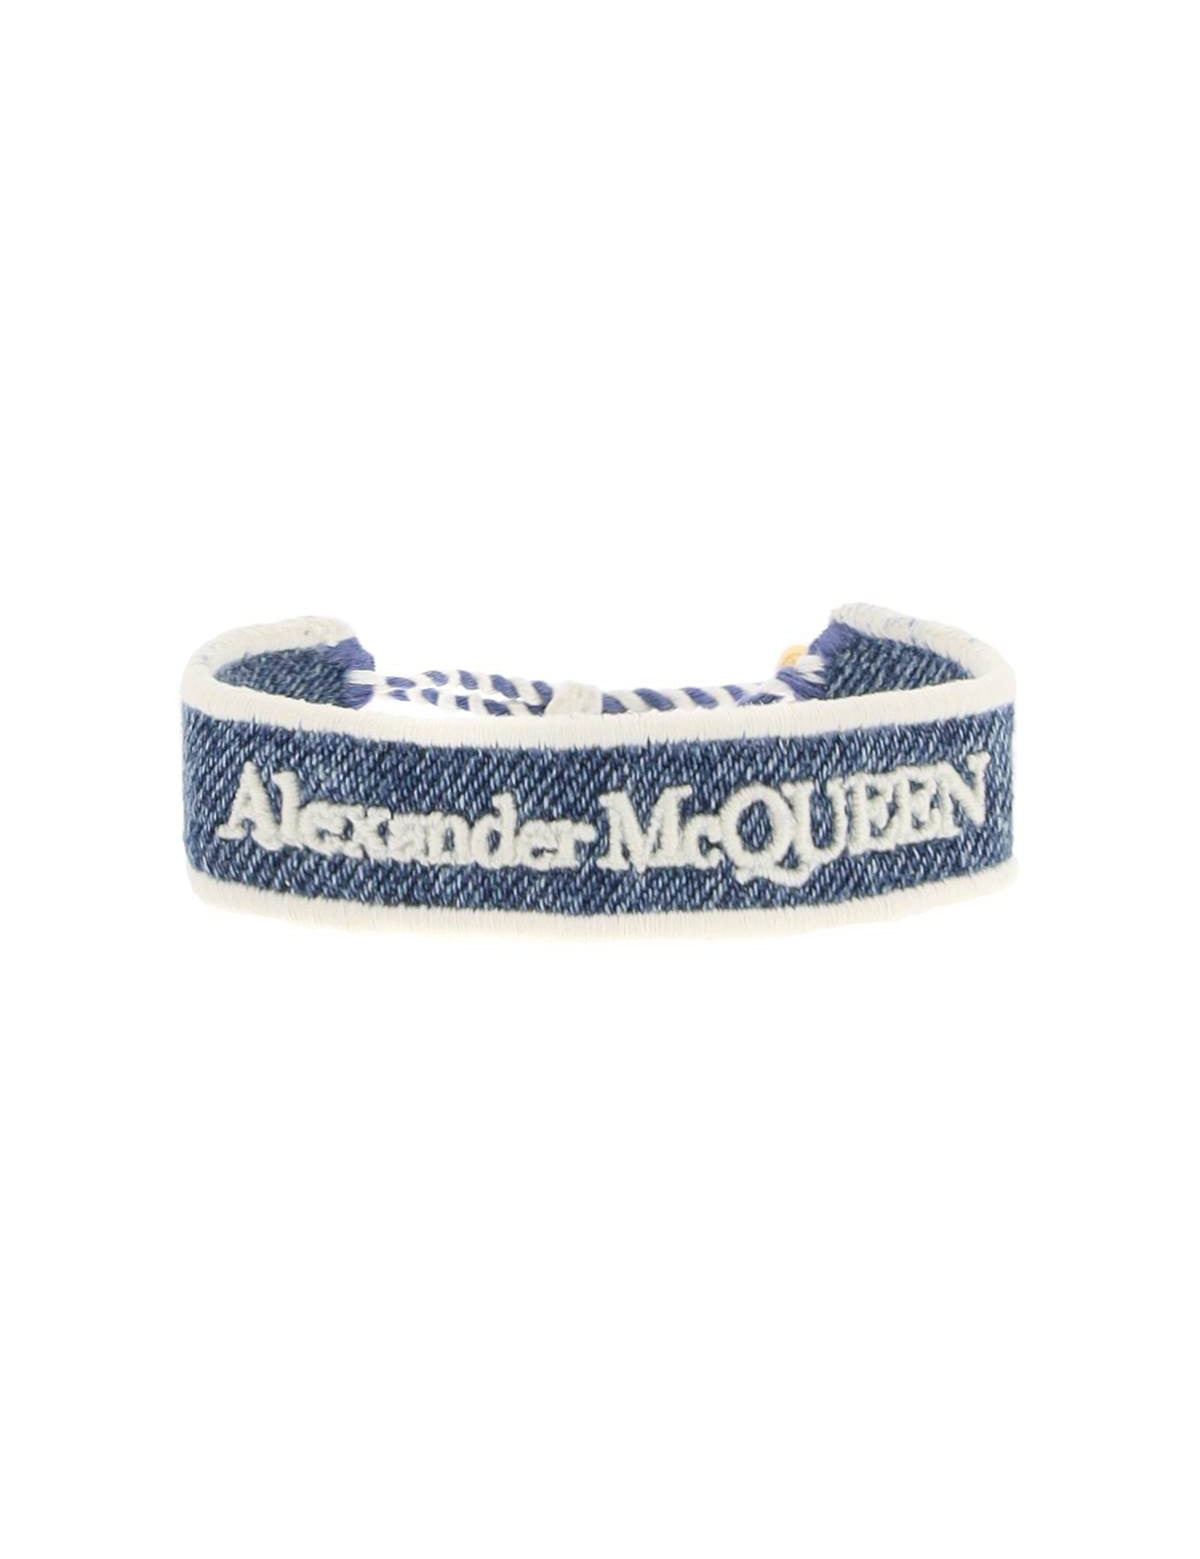 alexander-mcqueen-embroidered-bracelet.jpg